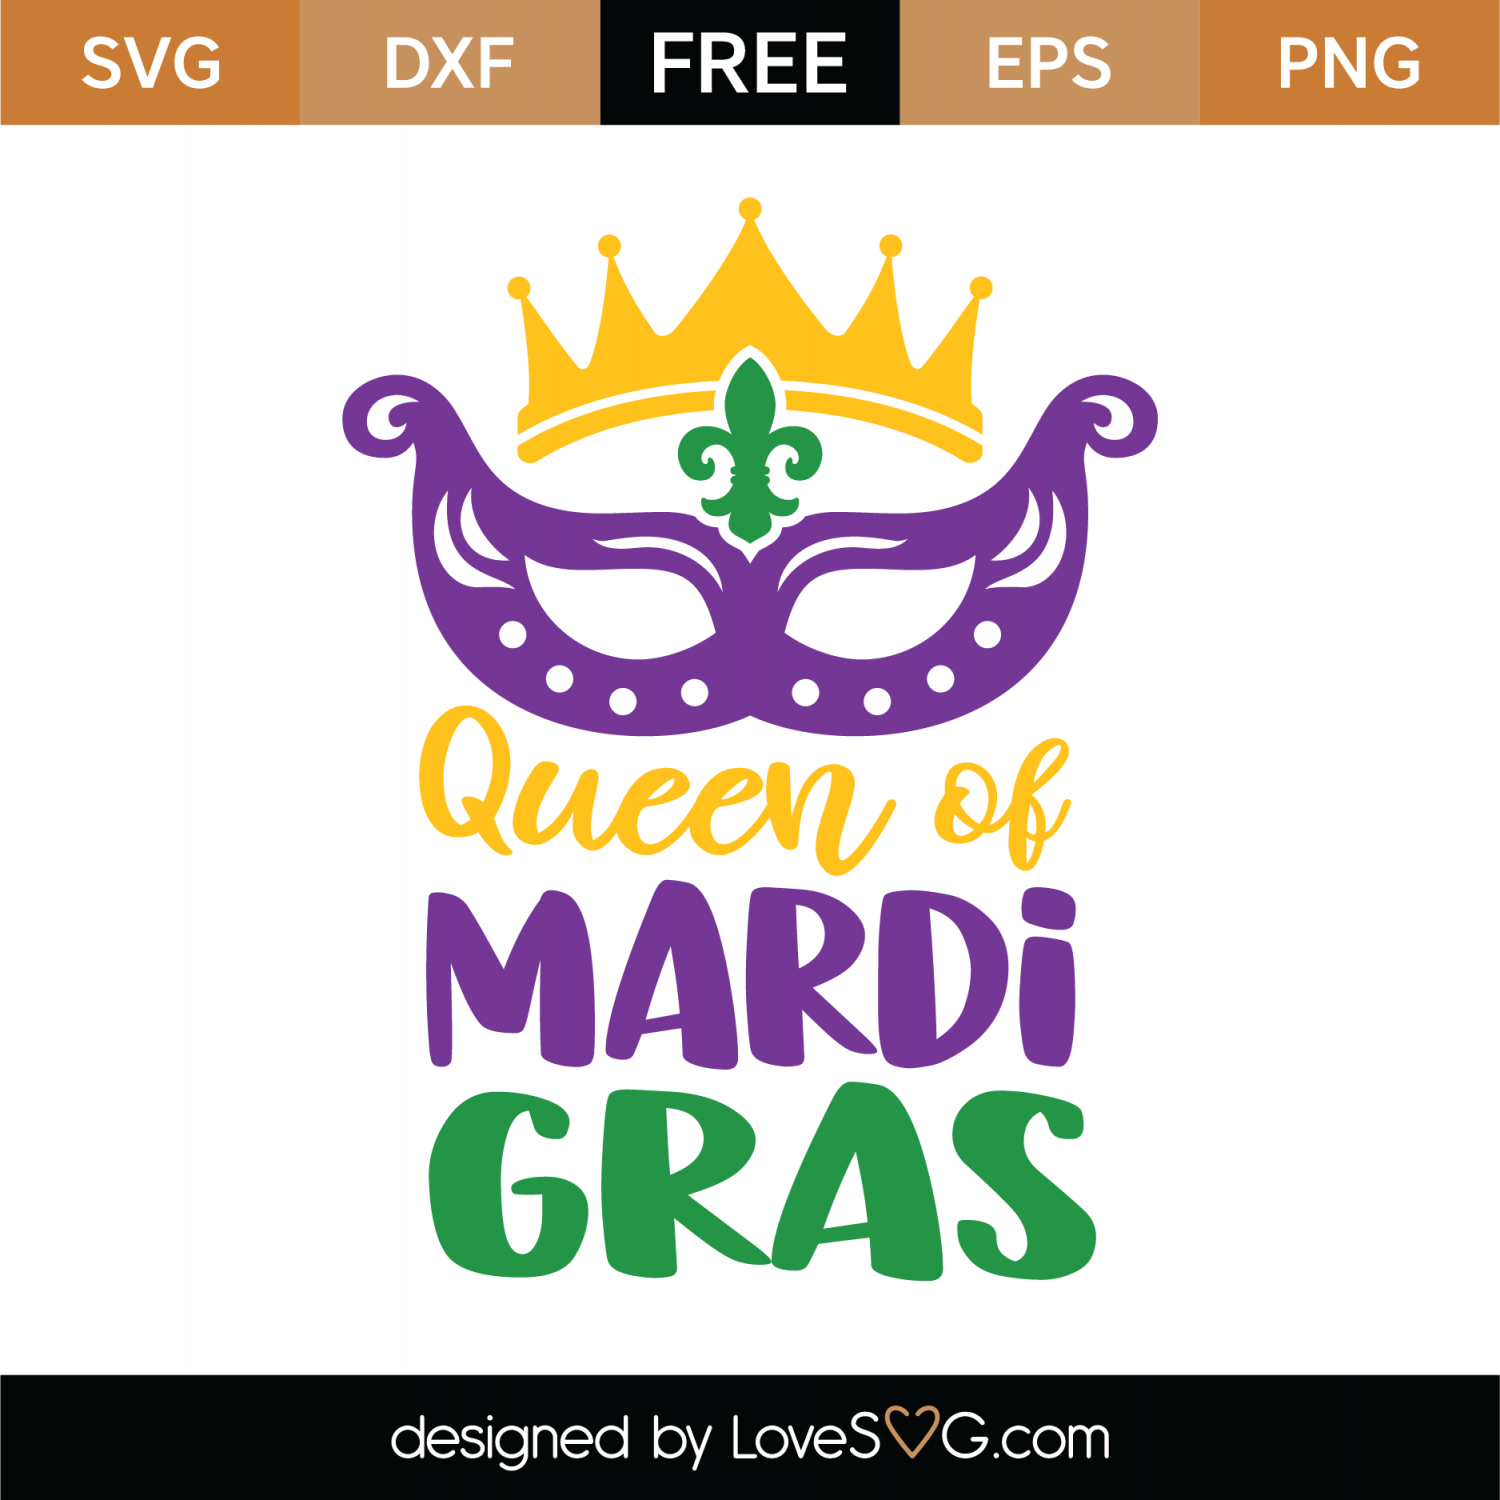 Free Queen of Mardi Gras SVG Cut File | Lovesvg.com